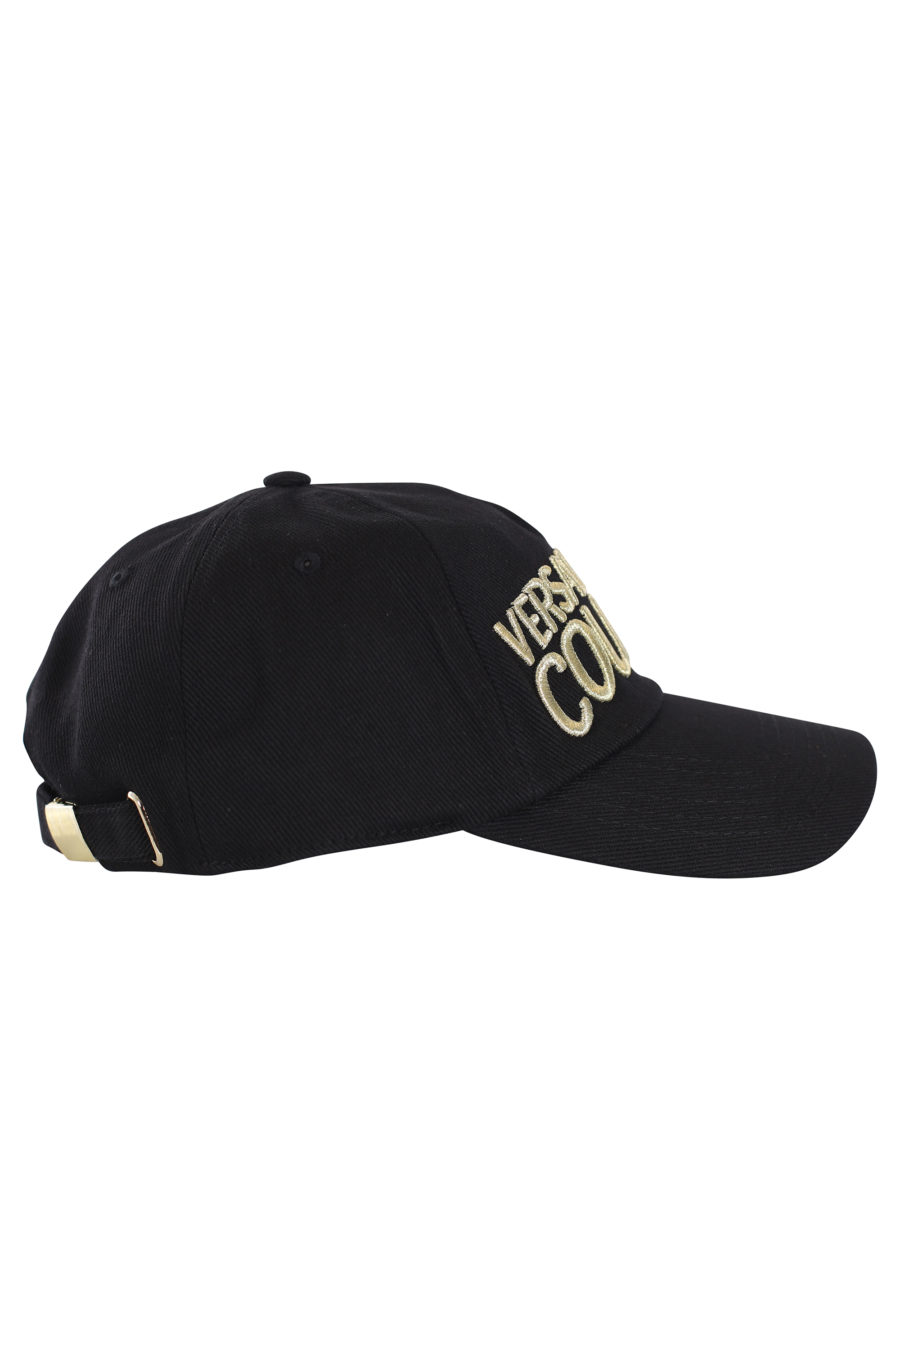 Schwarze Kappe mit gesticktem Logo in Gold - IMG 0135